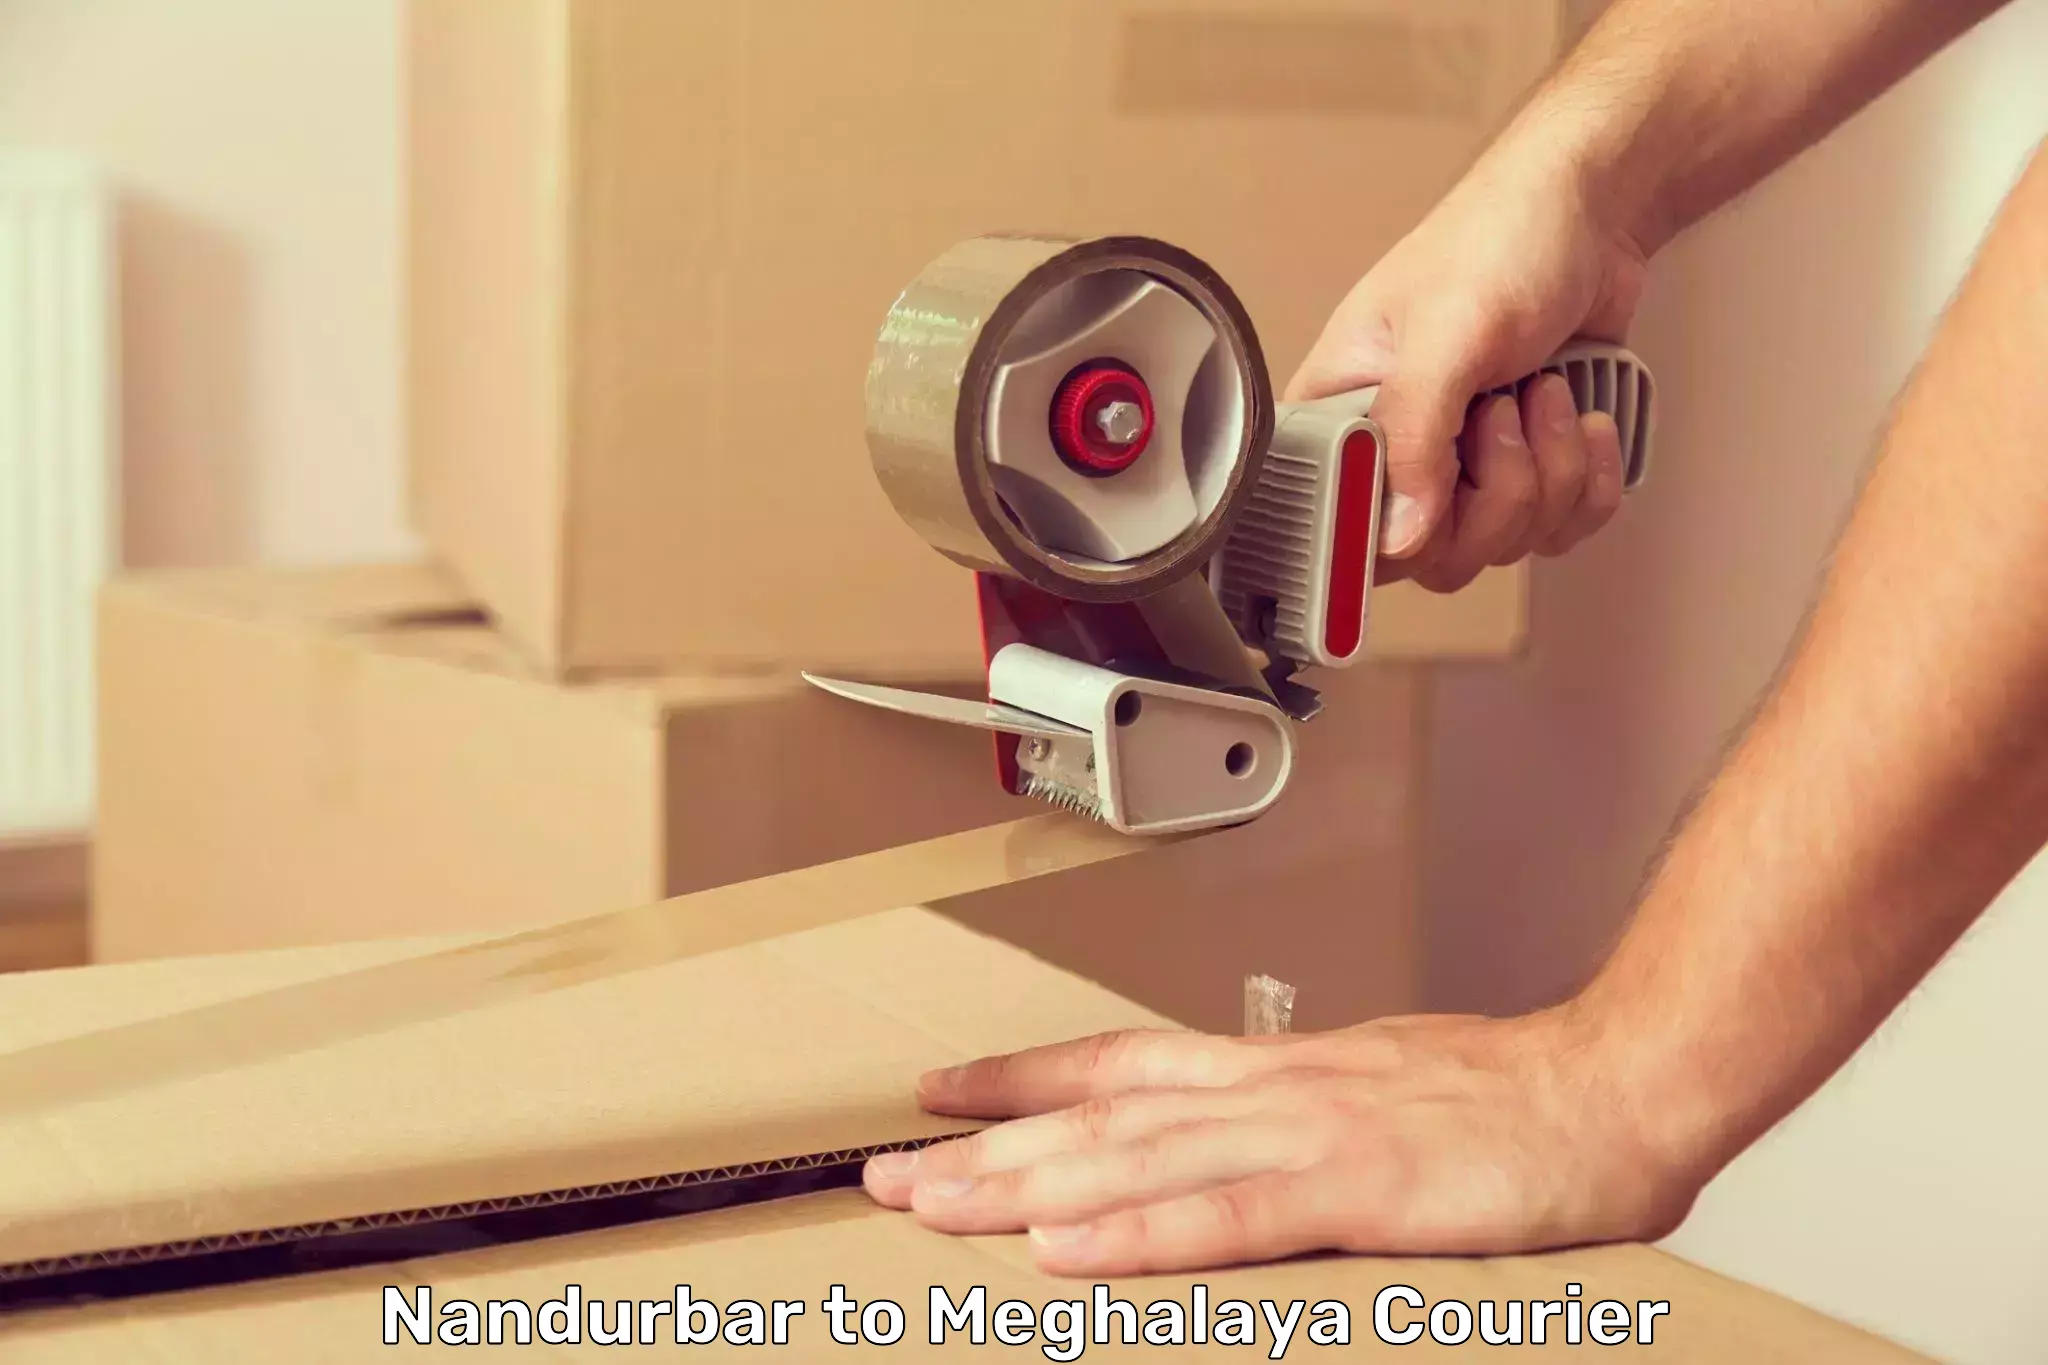 User-friendly courier app Nandurbar to Umsaw